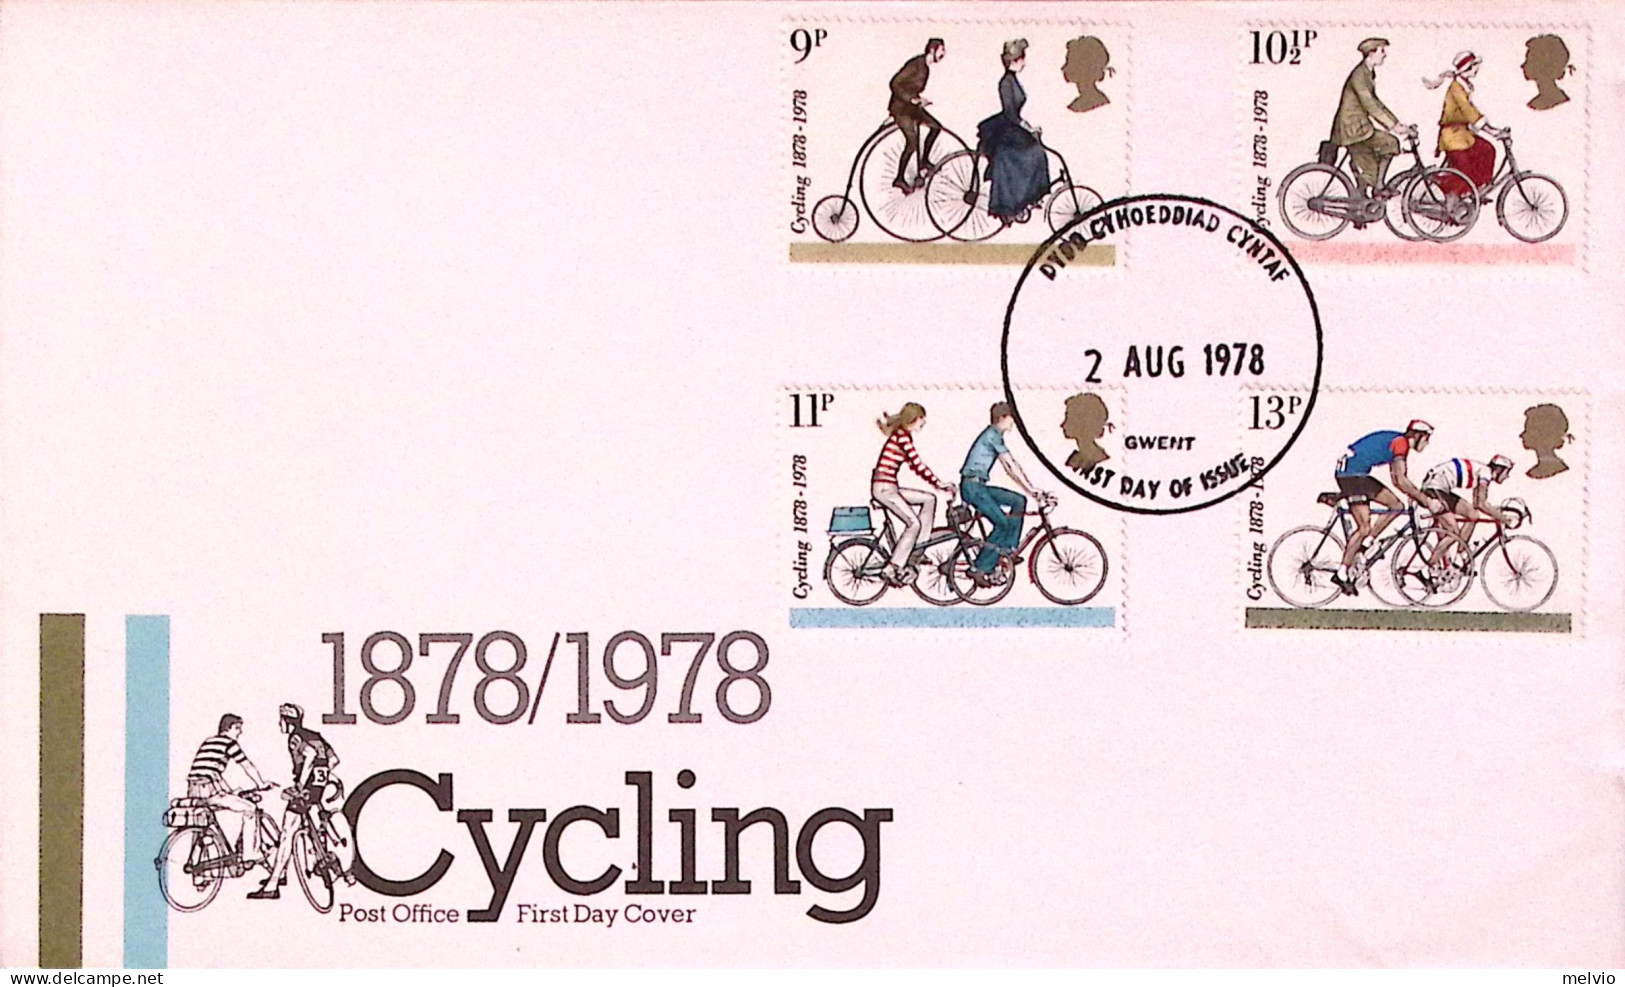 1978-GRAN BRETAGNA GREAT BRITAIN Touring Club Ciclistico Serie Cpl. (872/5) Fdc - Covers & Documents